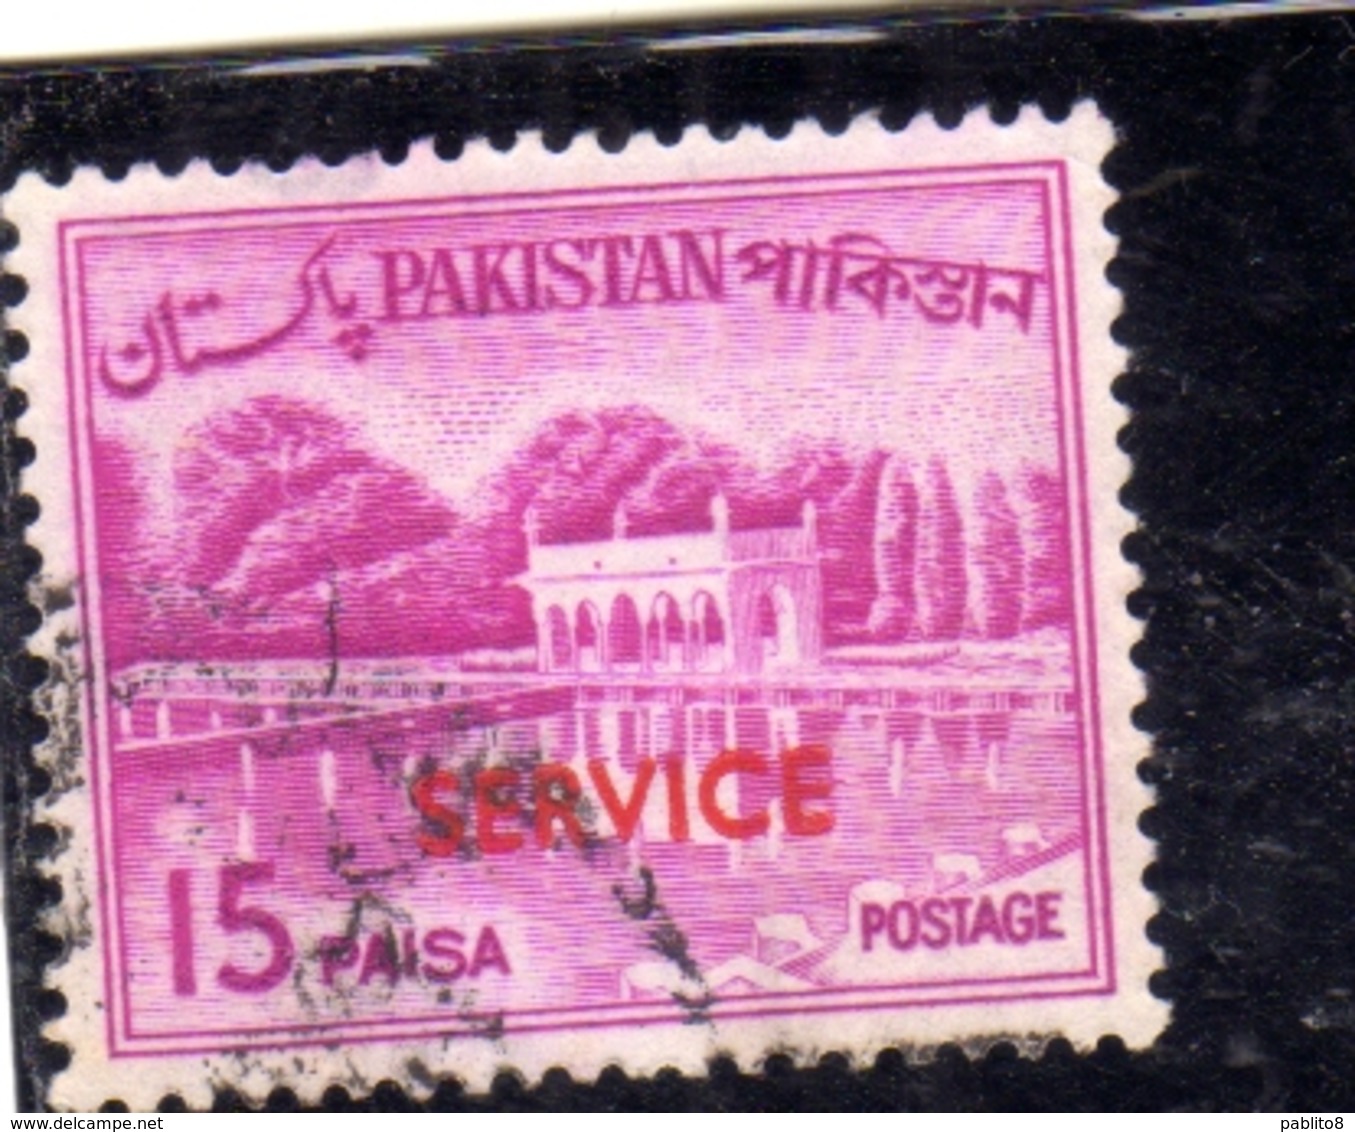 PAKISTAN 1961 1966 1964 OFFICAL STAMPS LANDSCAPE SHALIMAR GARDENS LAHORE SERVICE OVERPRINTED 15p USED USATO OBLITERE - Pakistan